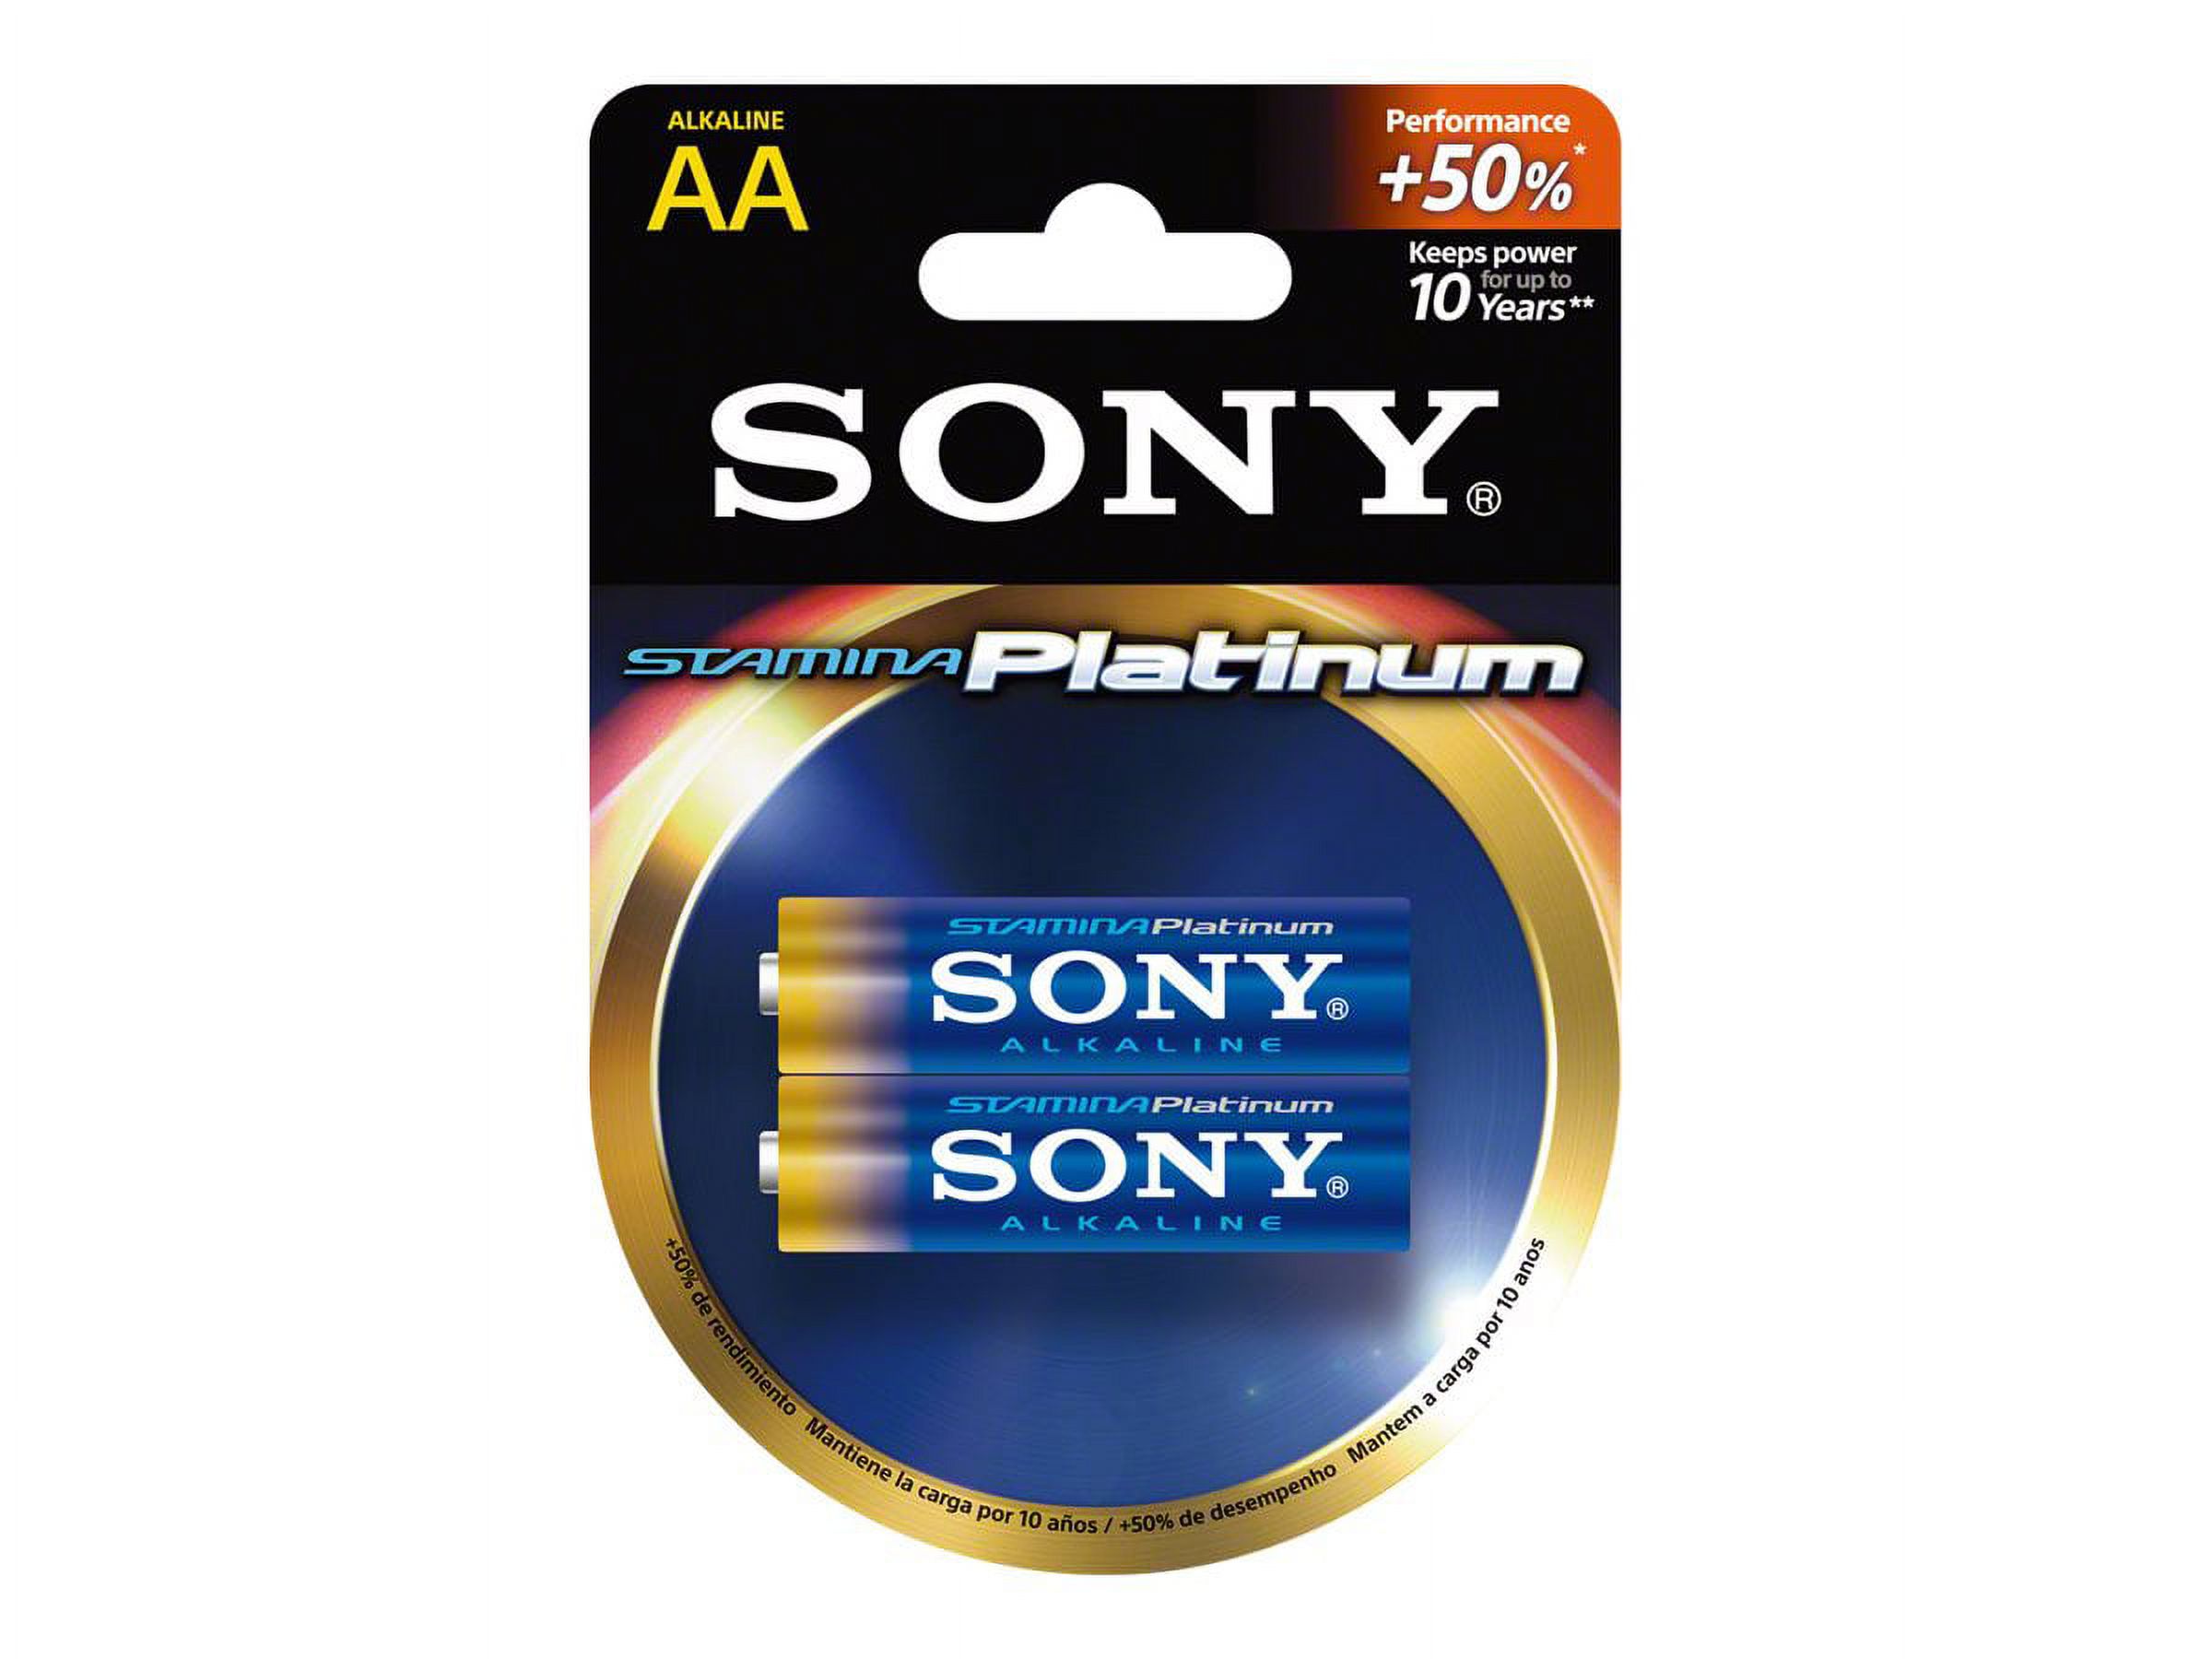 Sony Stamina Platinum AM3PT-B2D - Battery 2 x AA type - alkaline - image 1 of 10